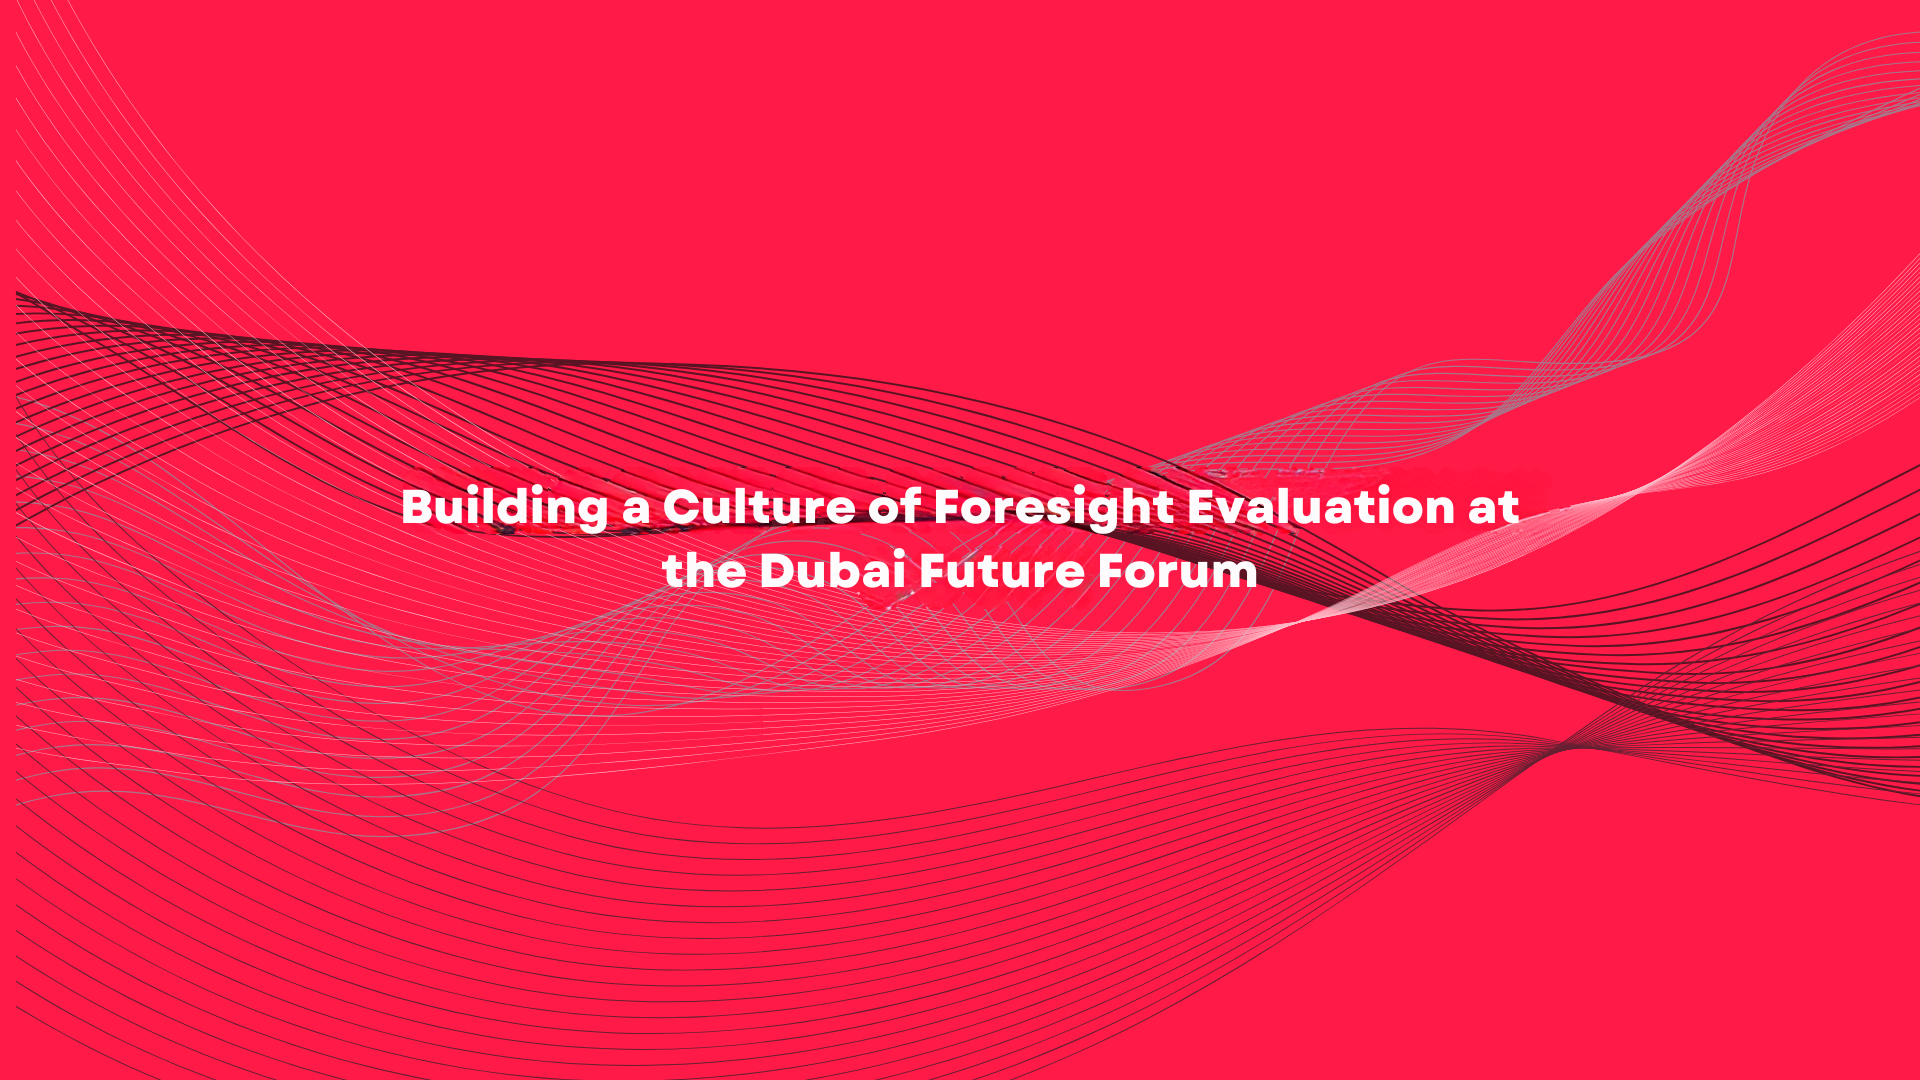 Building a Culture of Foresight Evaluation at the Dubai Future Forum